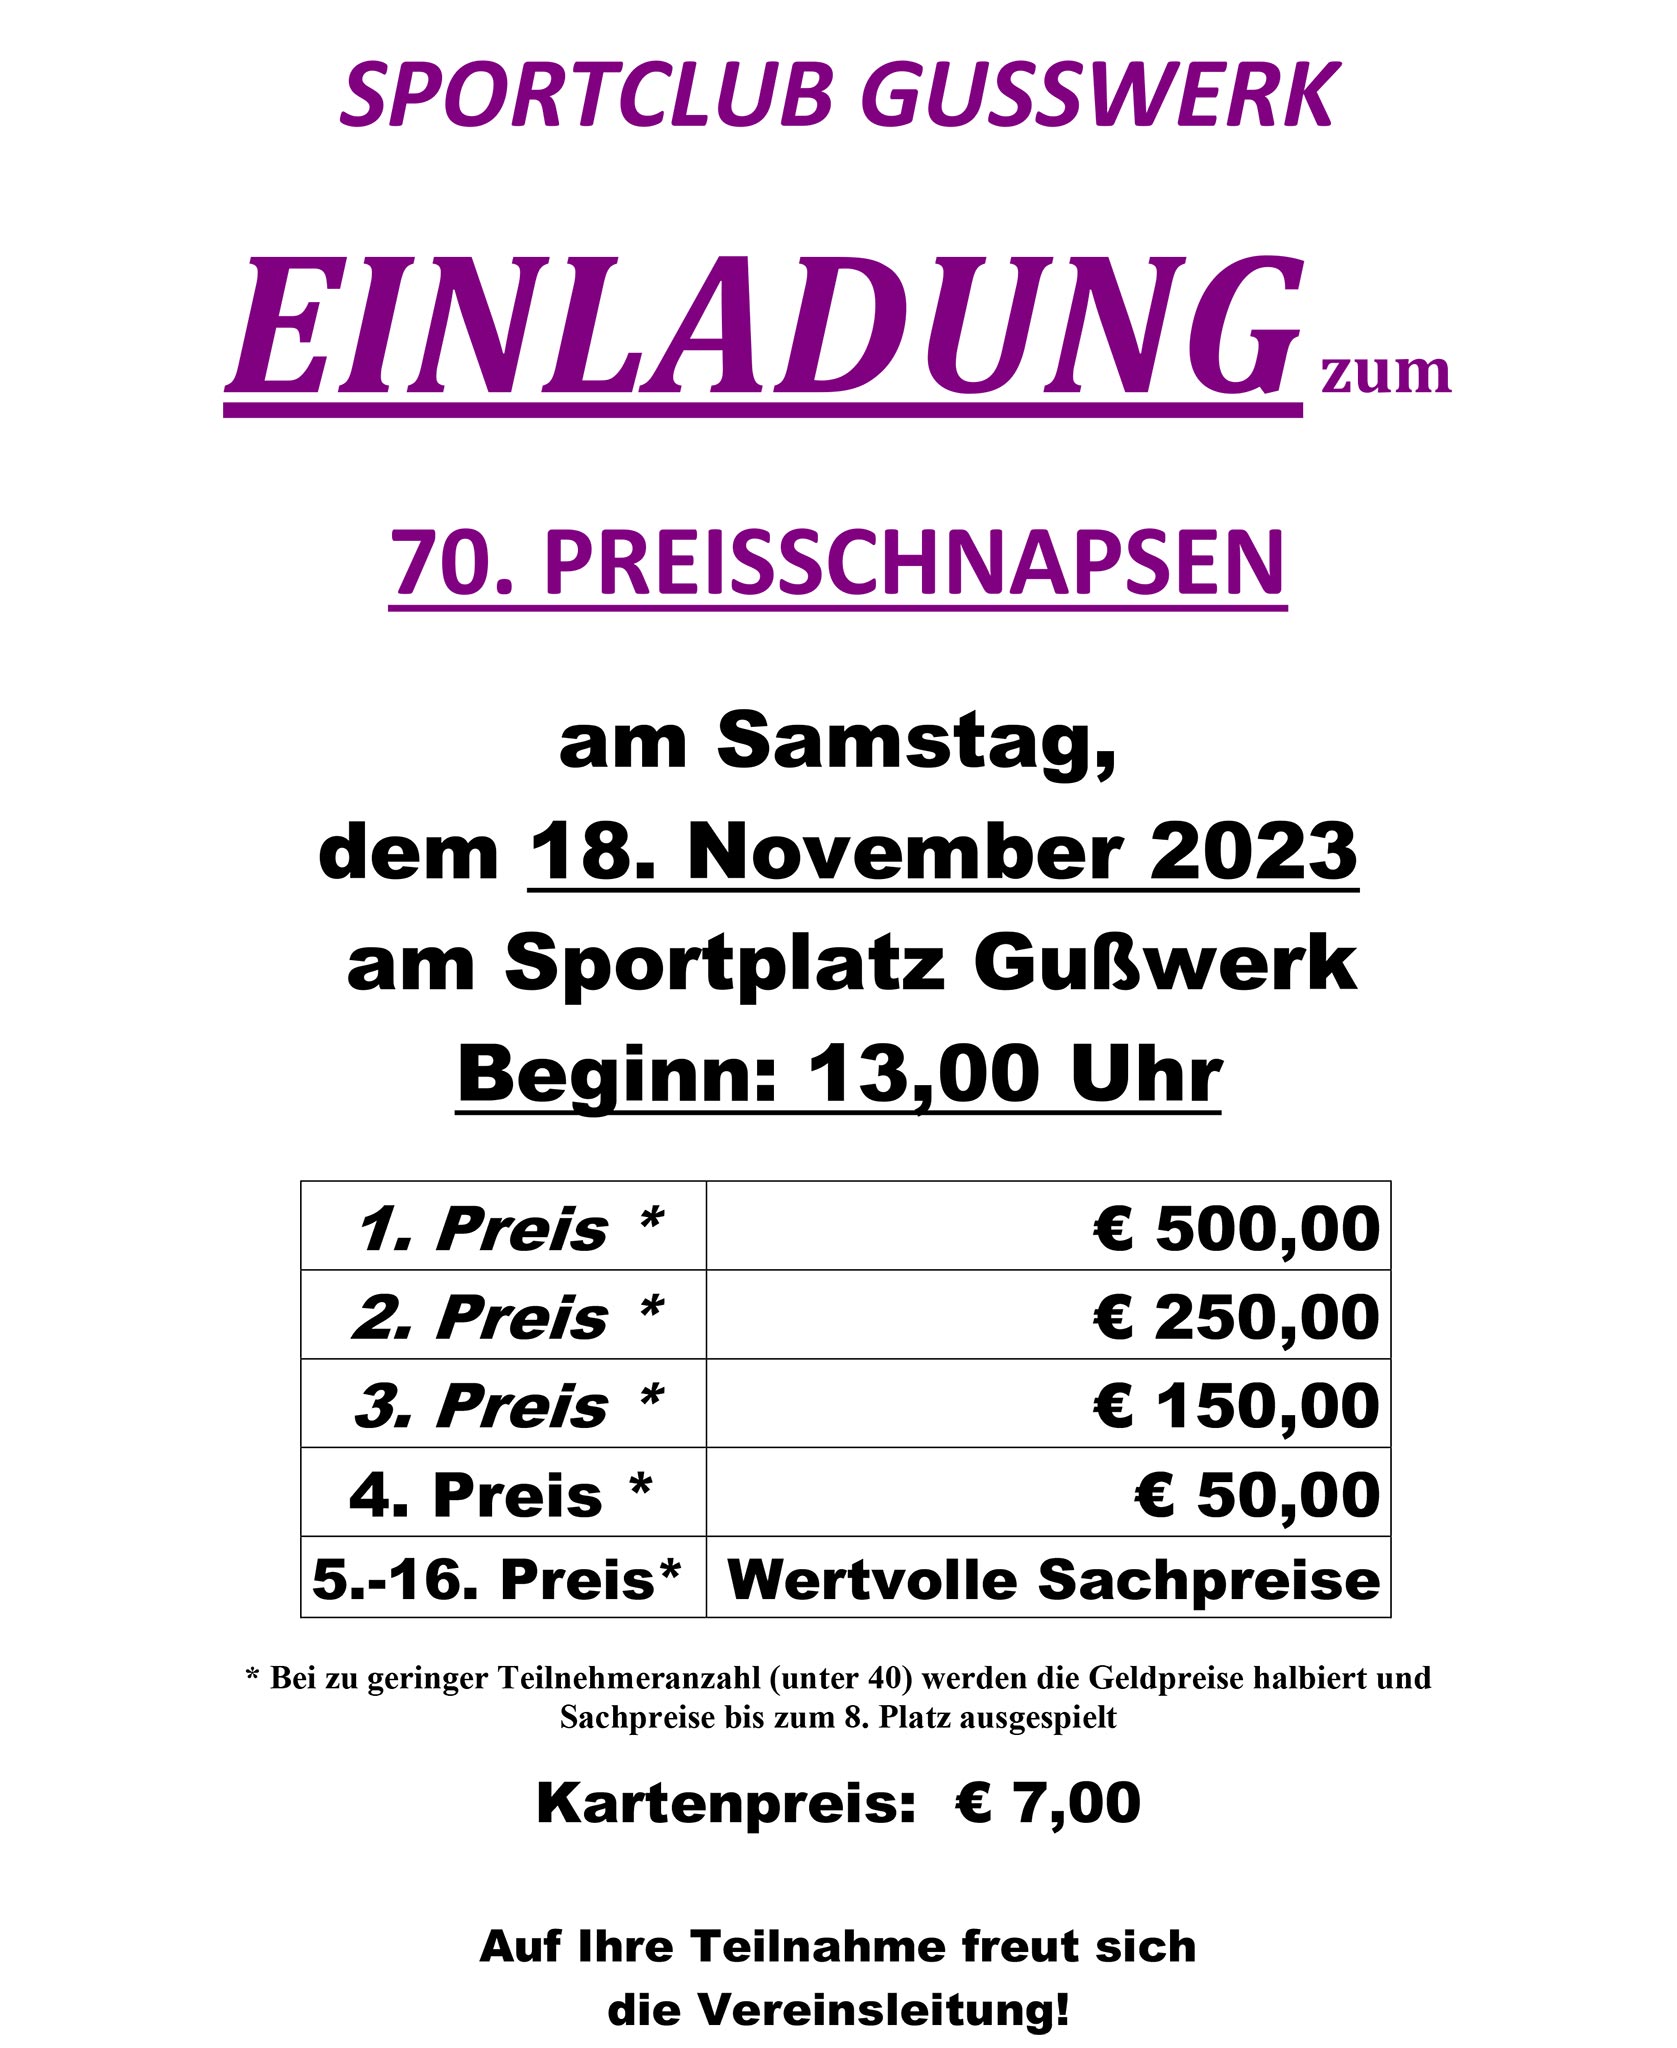 Preisschnapsen in Gußwerk am 18. November 2023